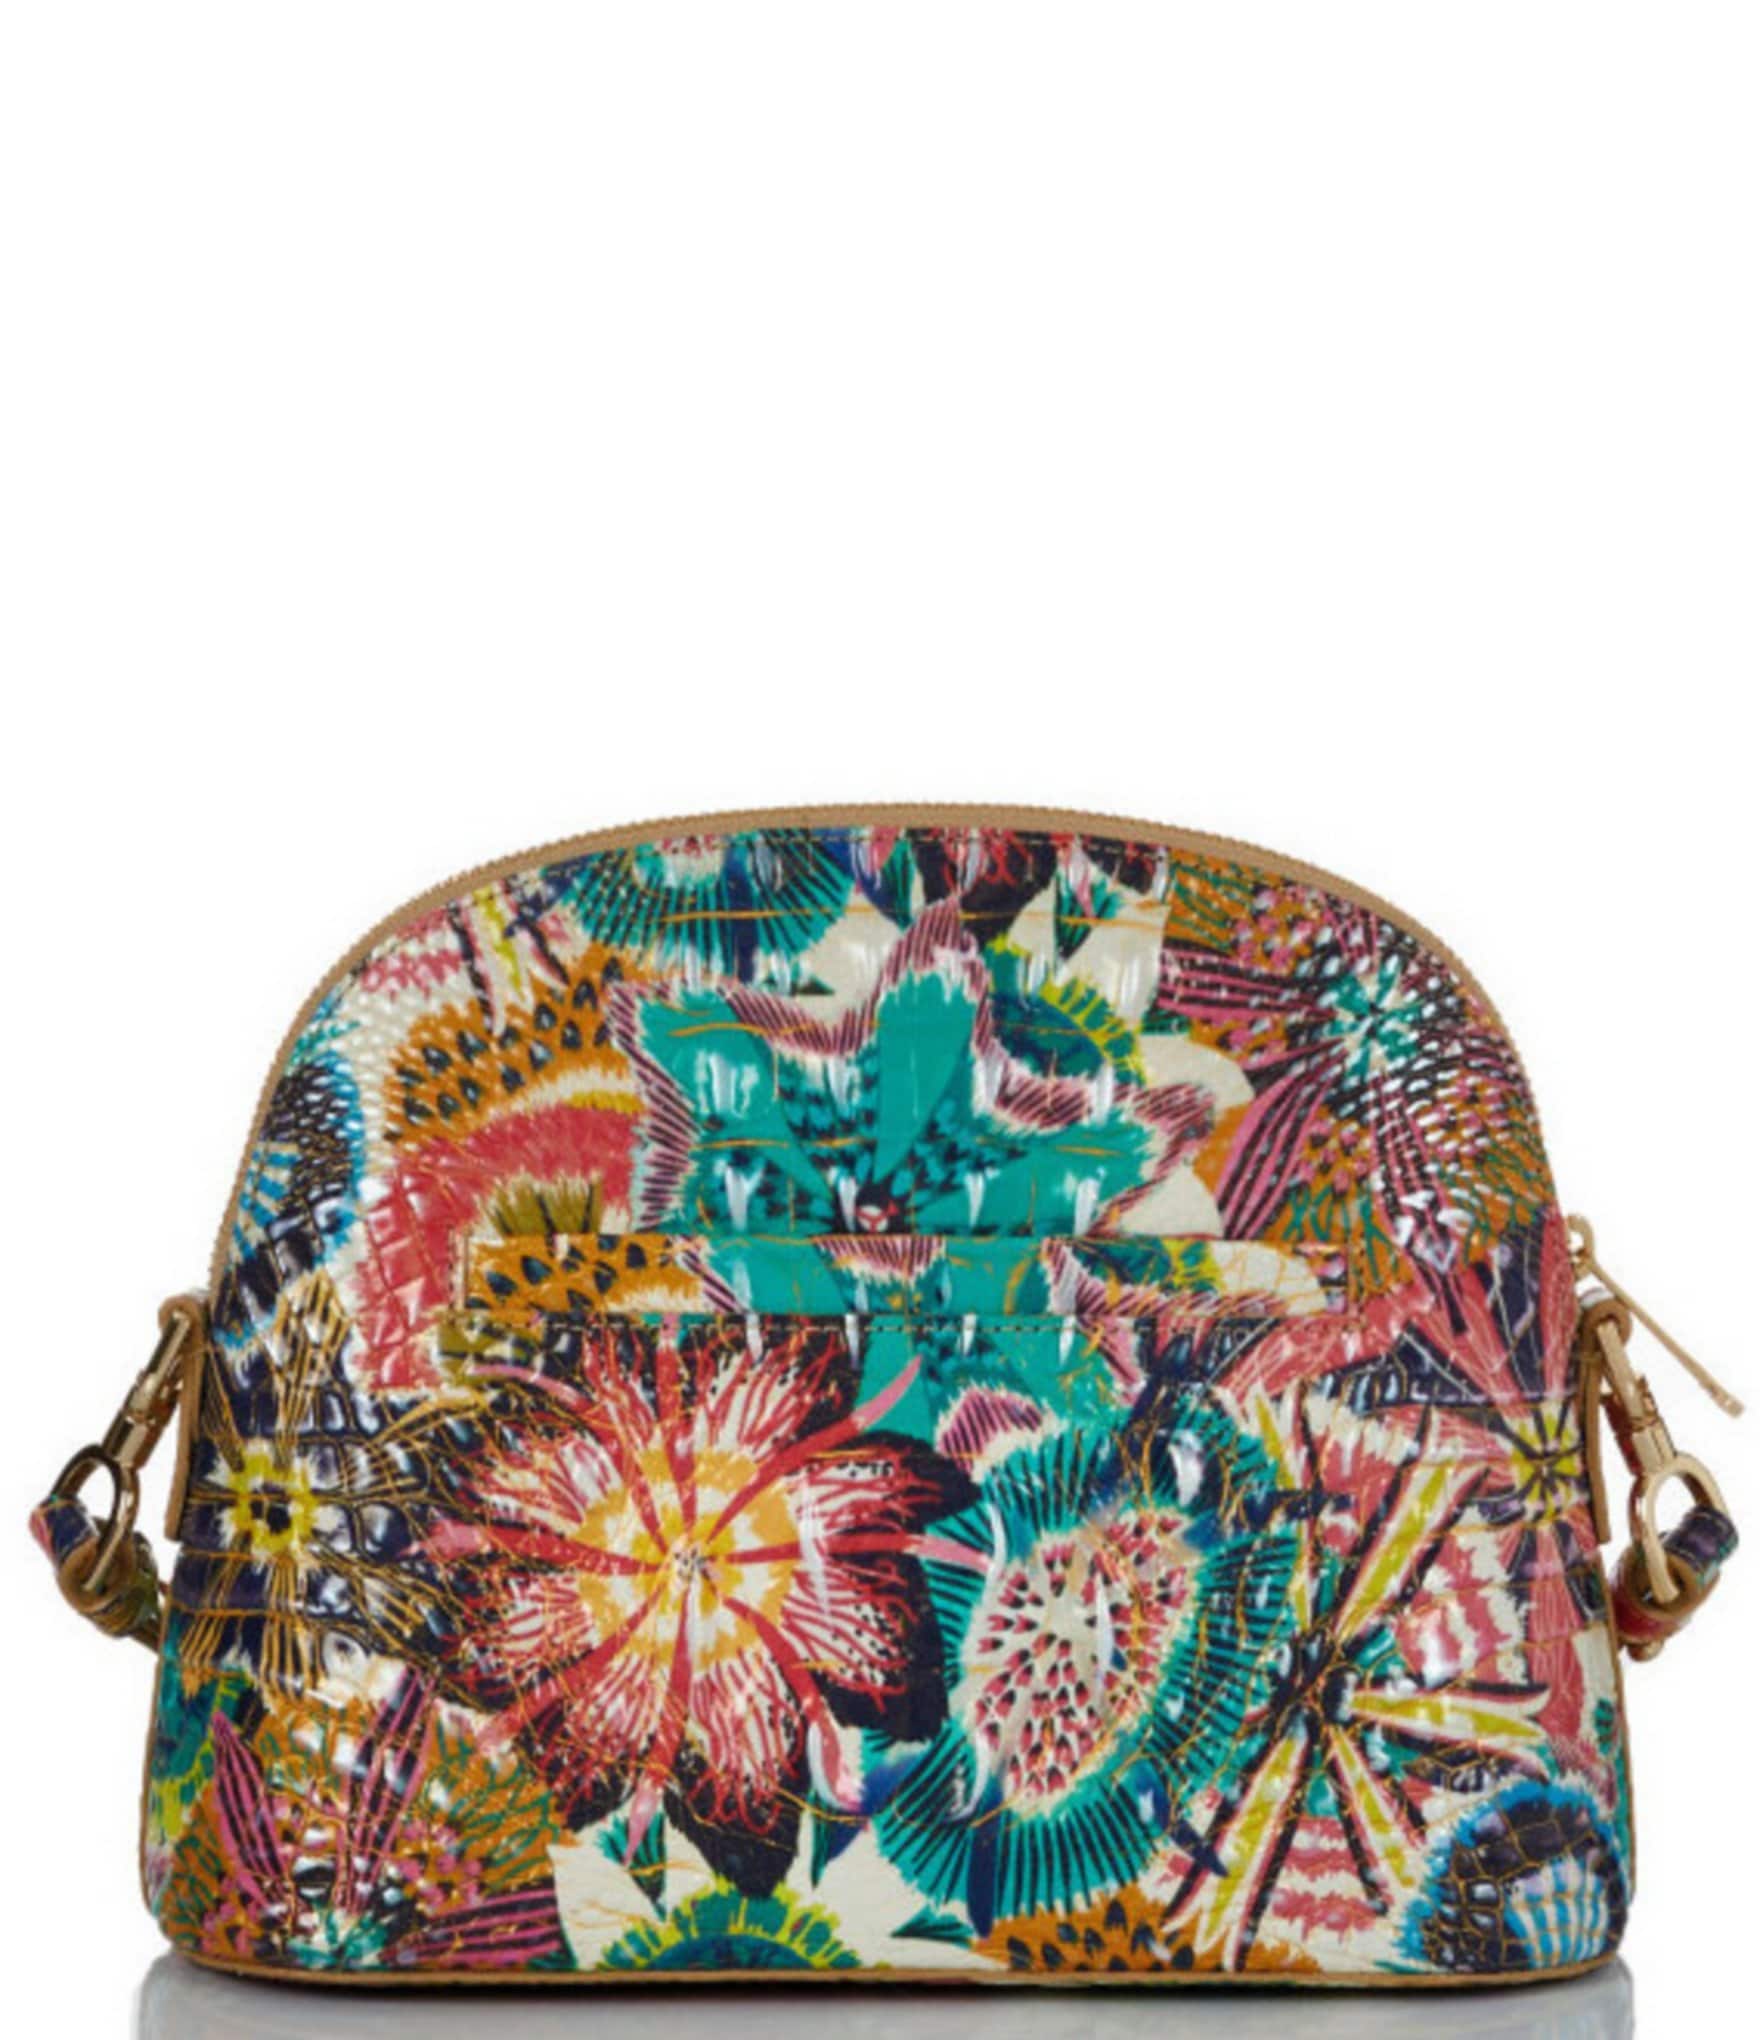 Brahmin Melbourne Large Duxbury Satchel (Desert Bloom) Handbags